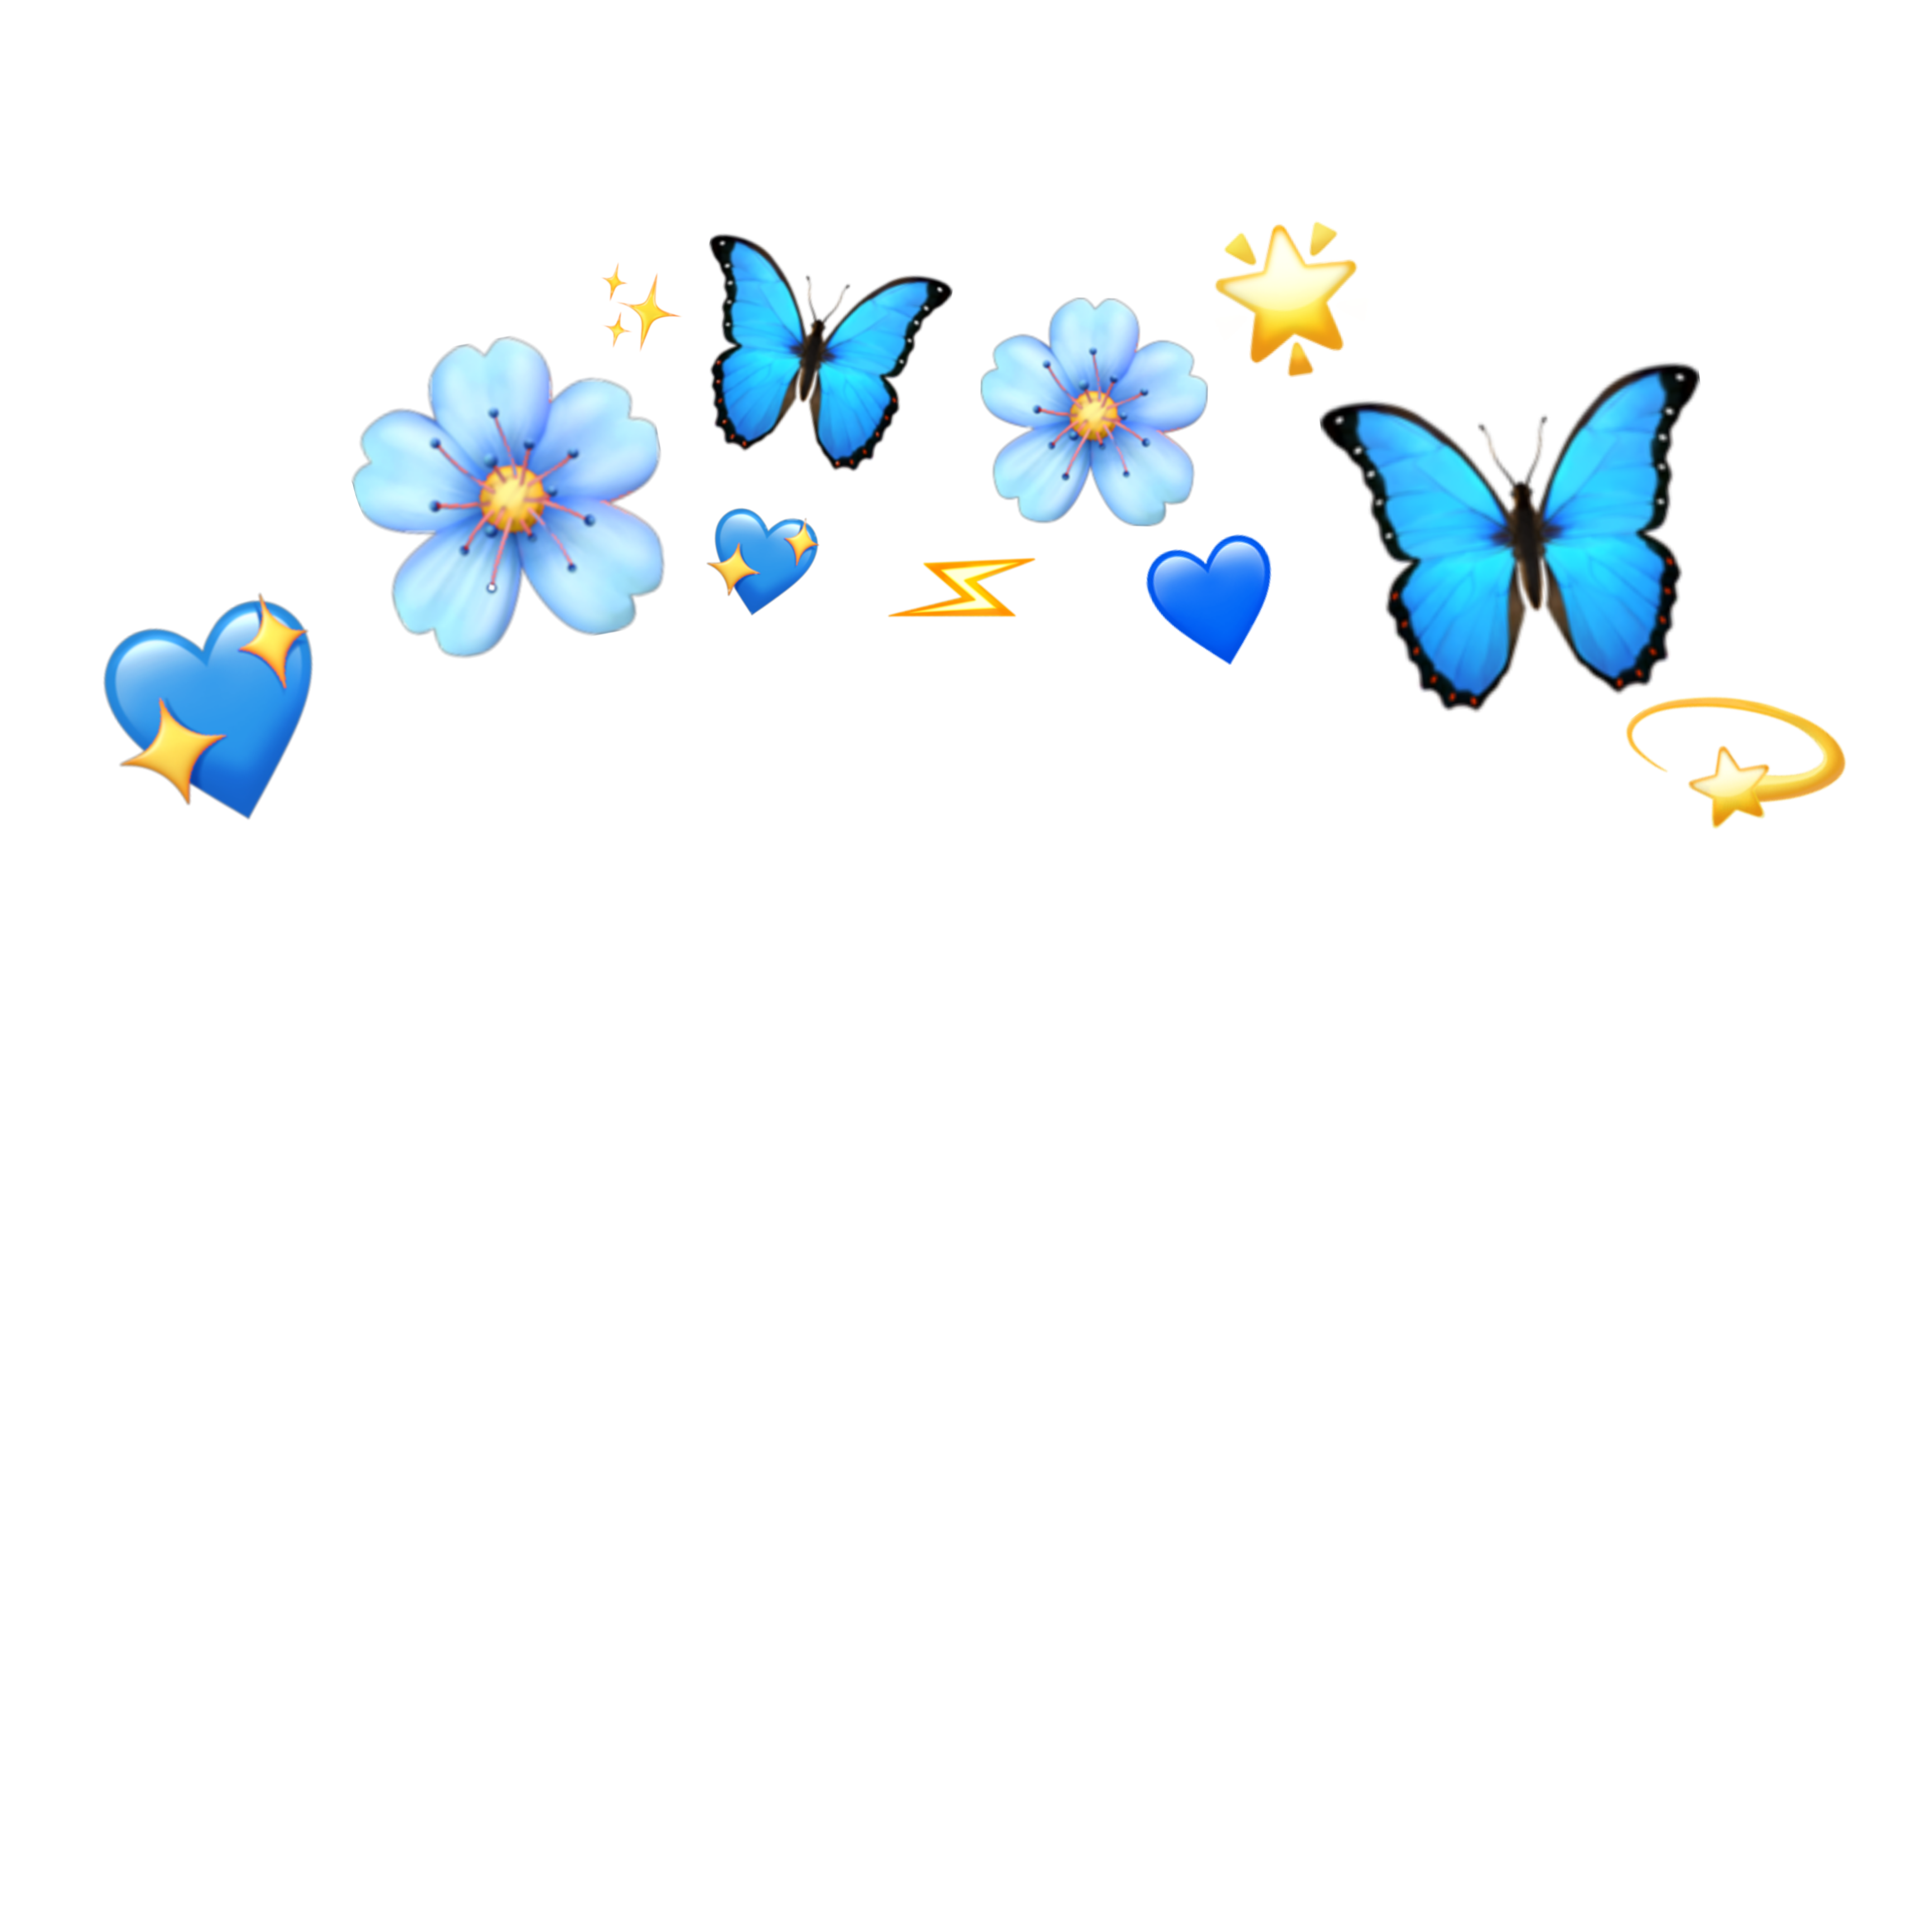 Бабочка над головой. Бабочки над головой. Голубая бабочка на прозрачном фоне. Цветы и бабочки на прозрачном фоне. Бабочки цветочки на прозрачном фоне.